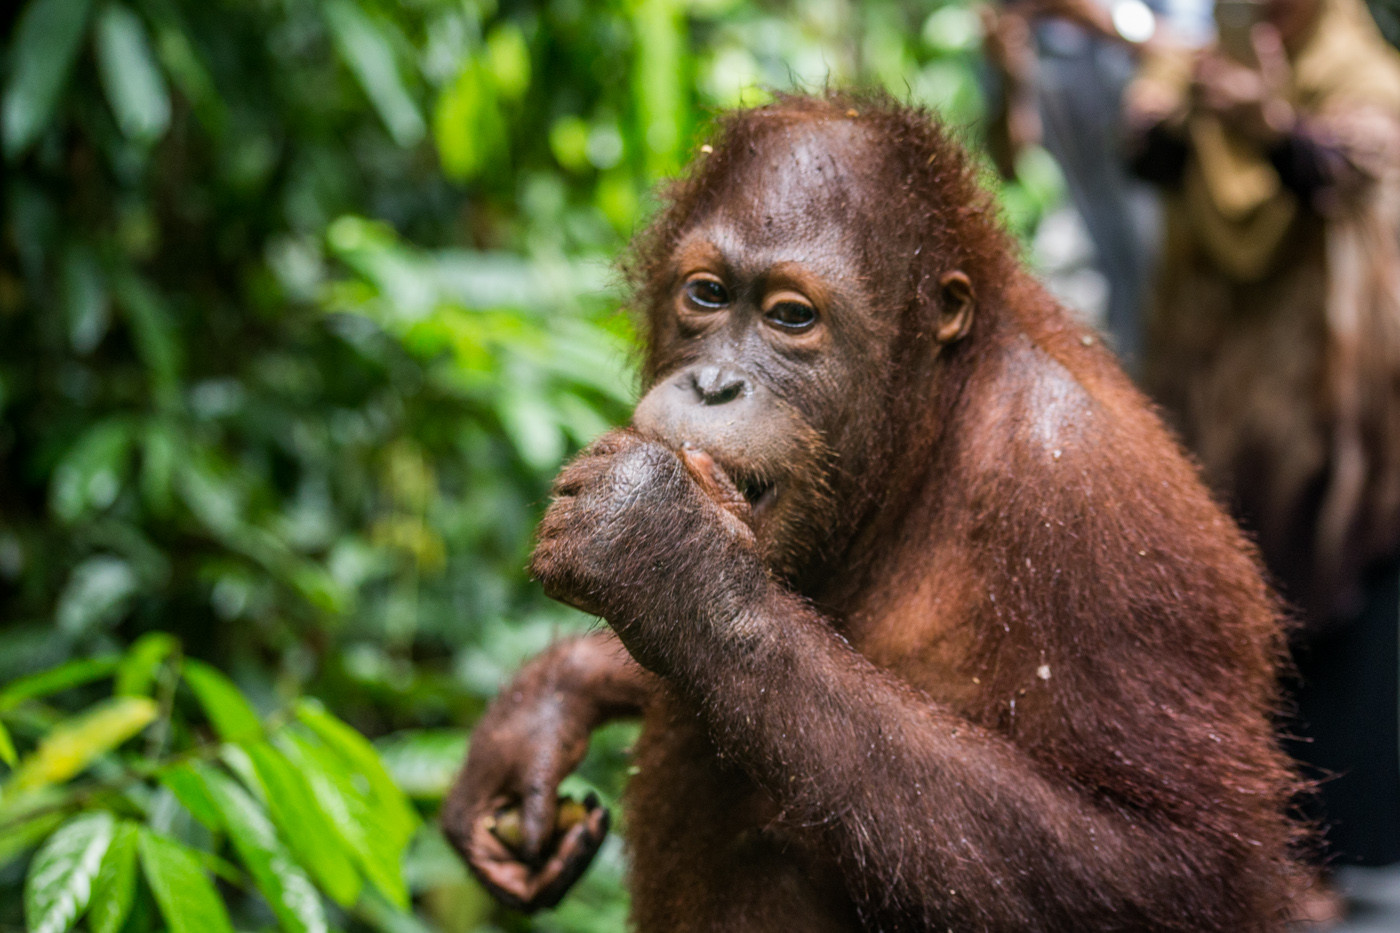 The elusive Borneo Orangutan